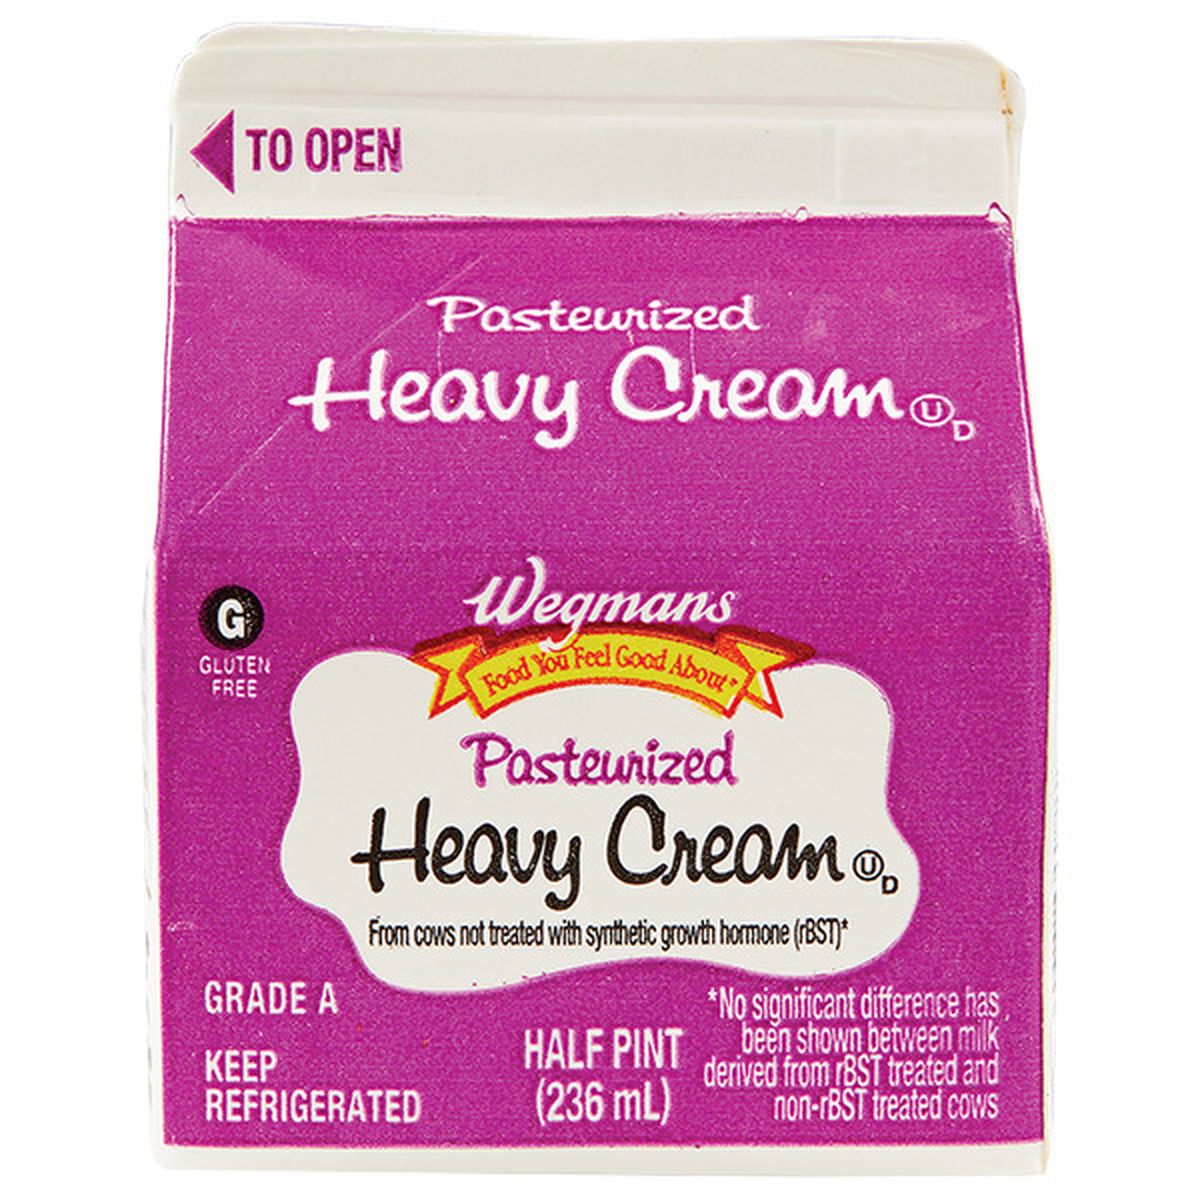 Calories in Wegmans Heavy Cream